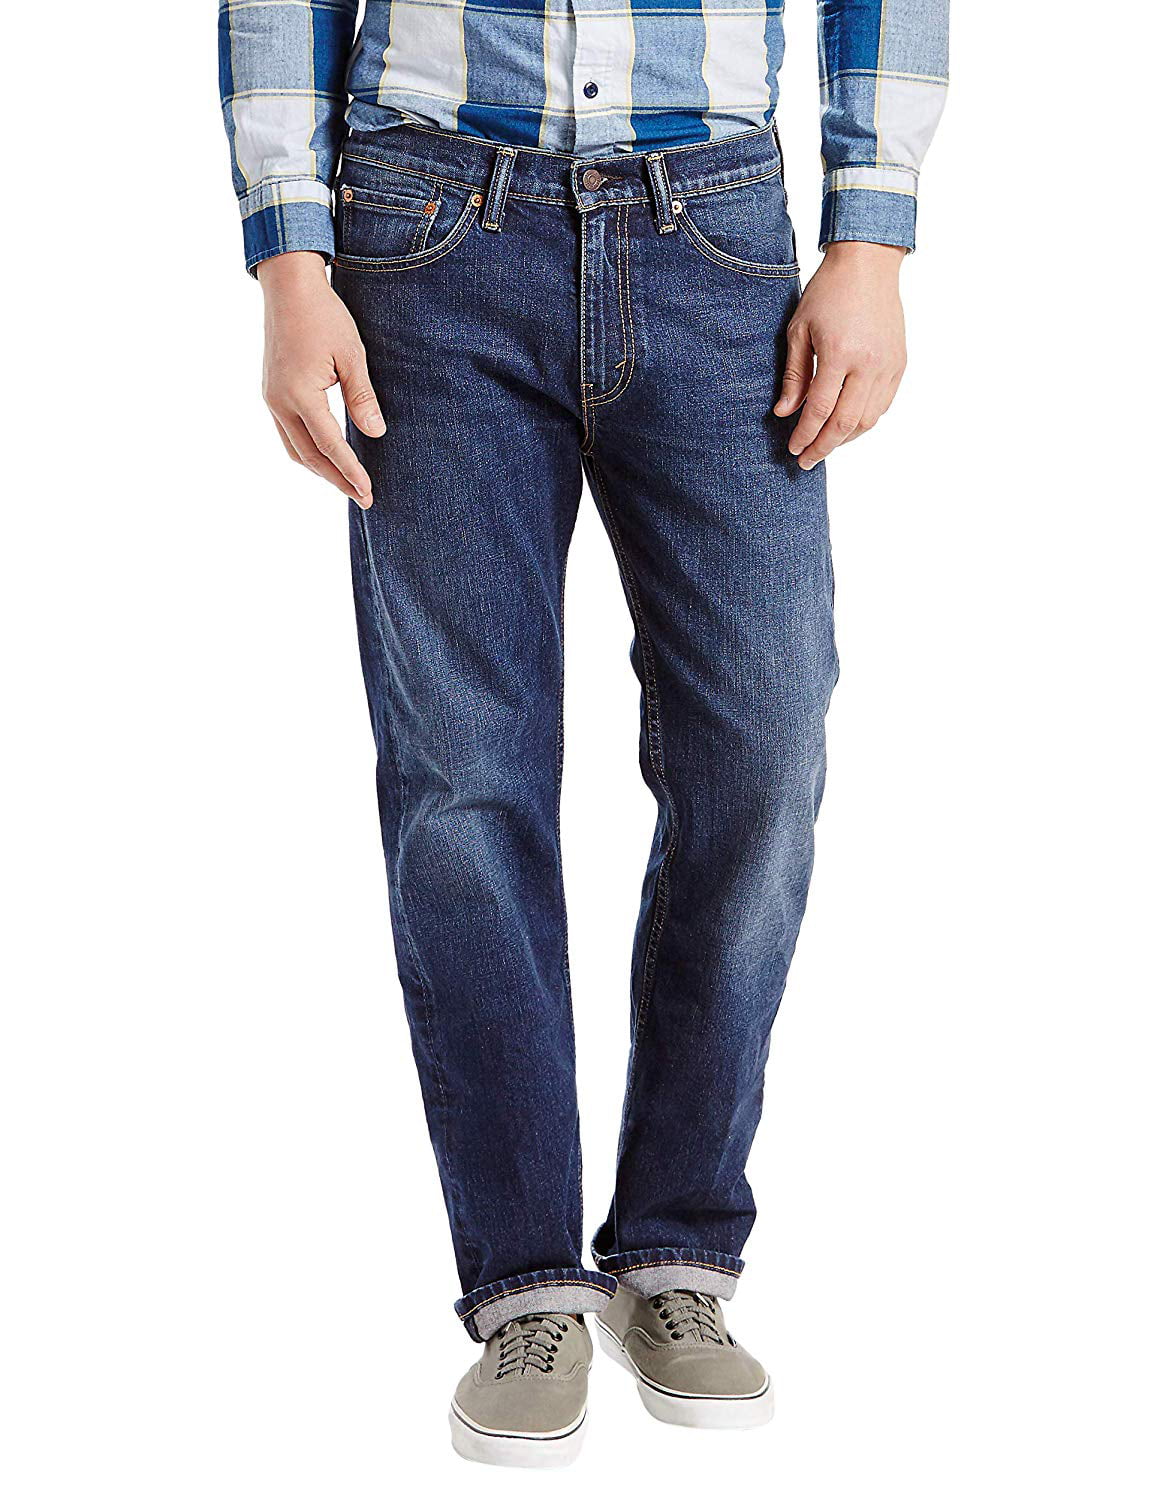 Levi's Men's 505 Regular Fit Jean, Hawker-Stretch, 33 30 | Walmart Canada